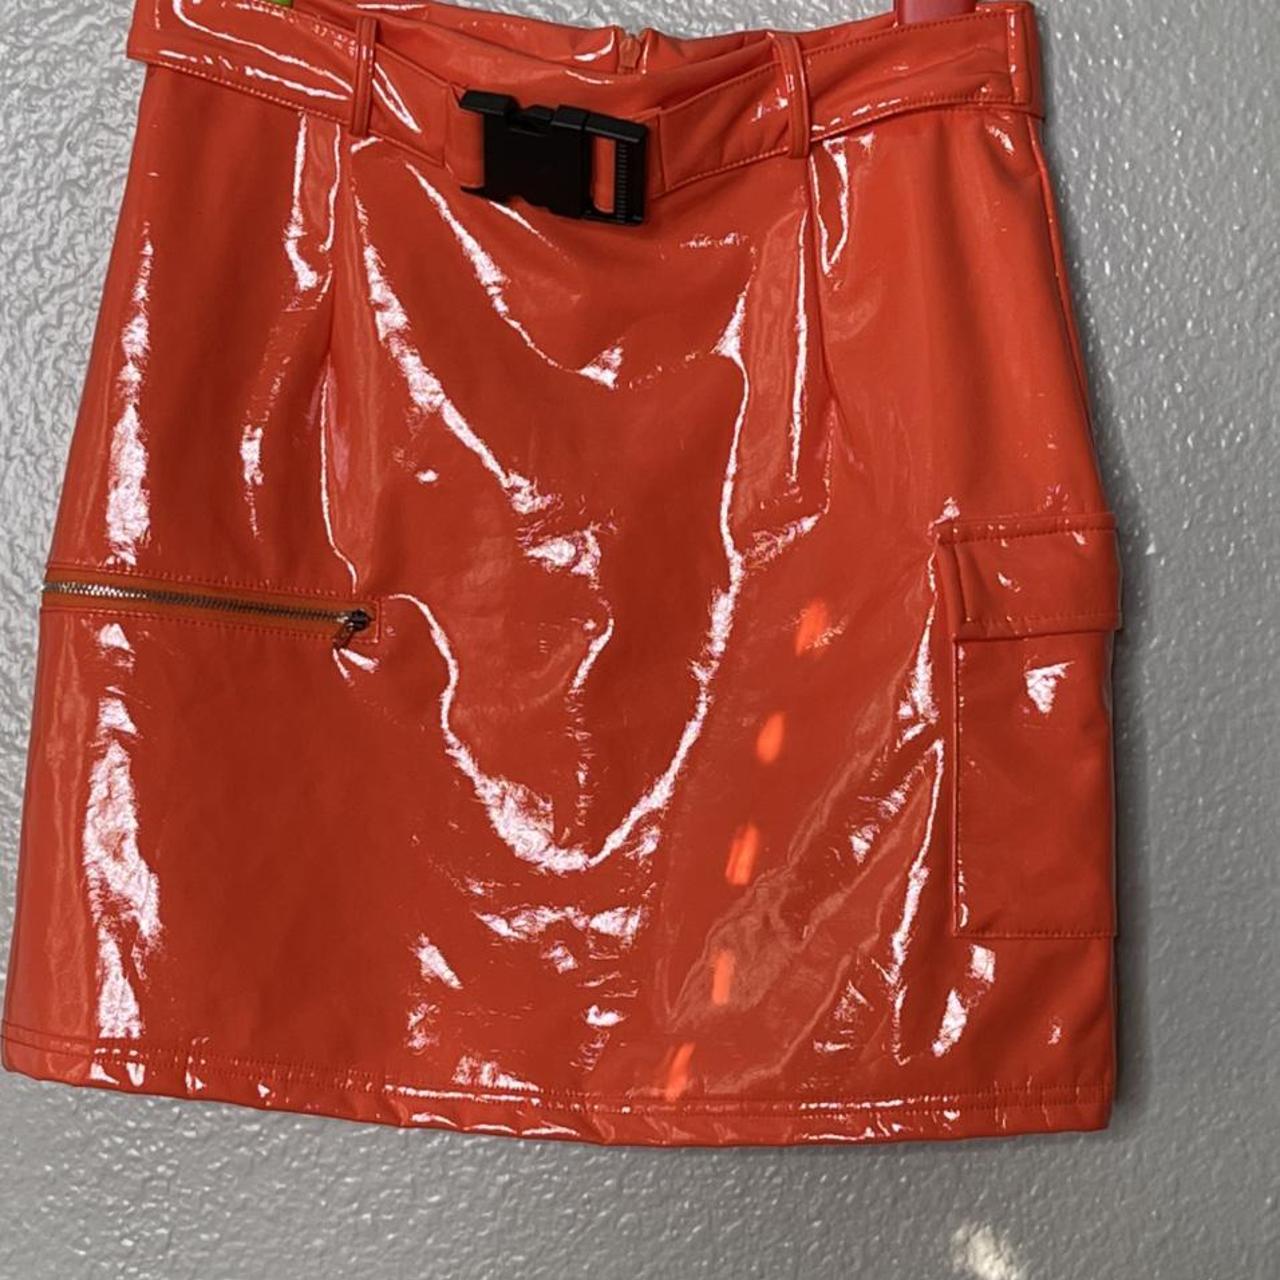 Product Image 1 - Naanaa orange leather skirt 

•